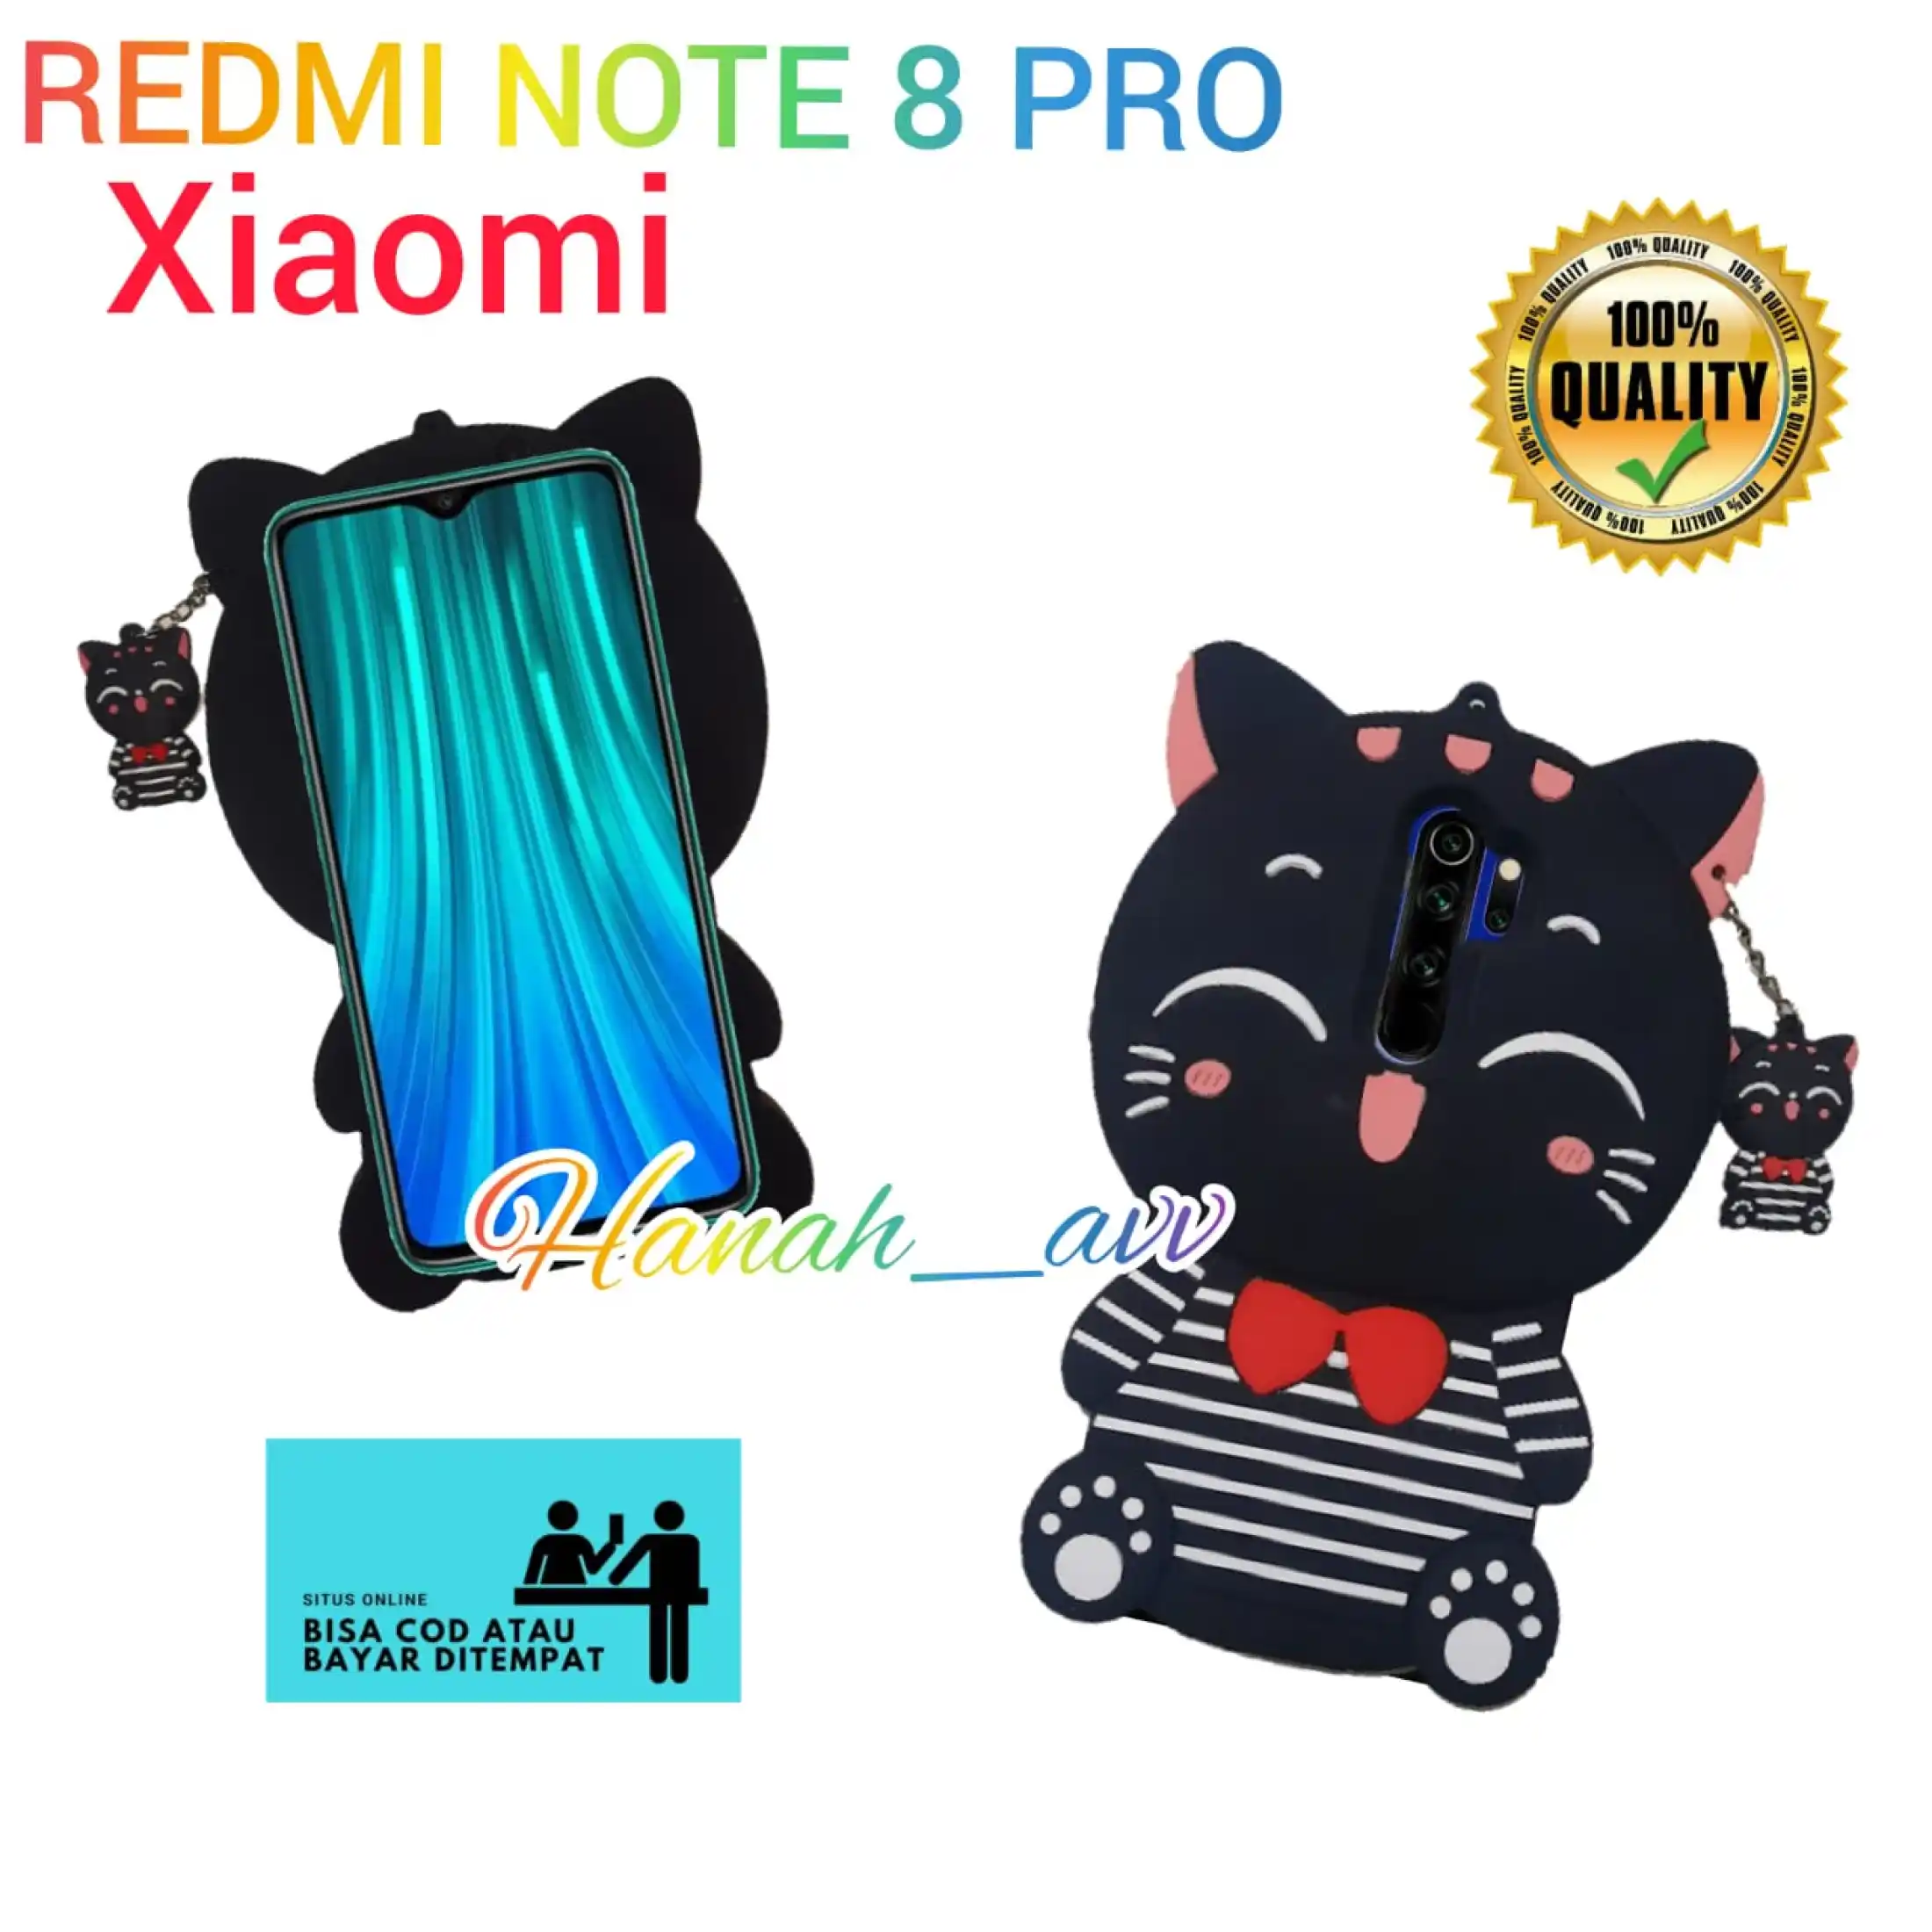 Silicon REDMI NOTE 8 PRO Kartun Karakter Kucing 4D Softcase Casing For REDMI NOTE 8 PRO Lazada Indonesia